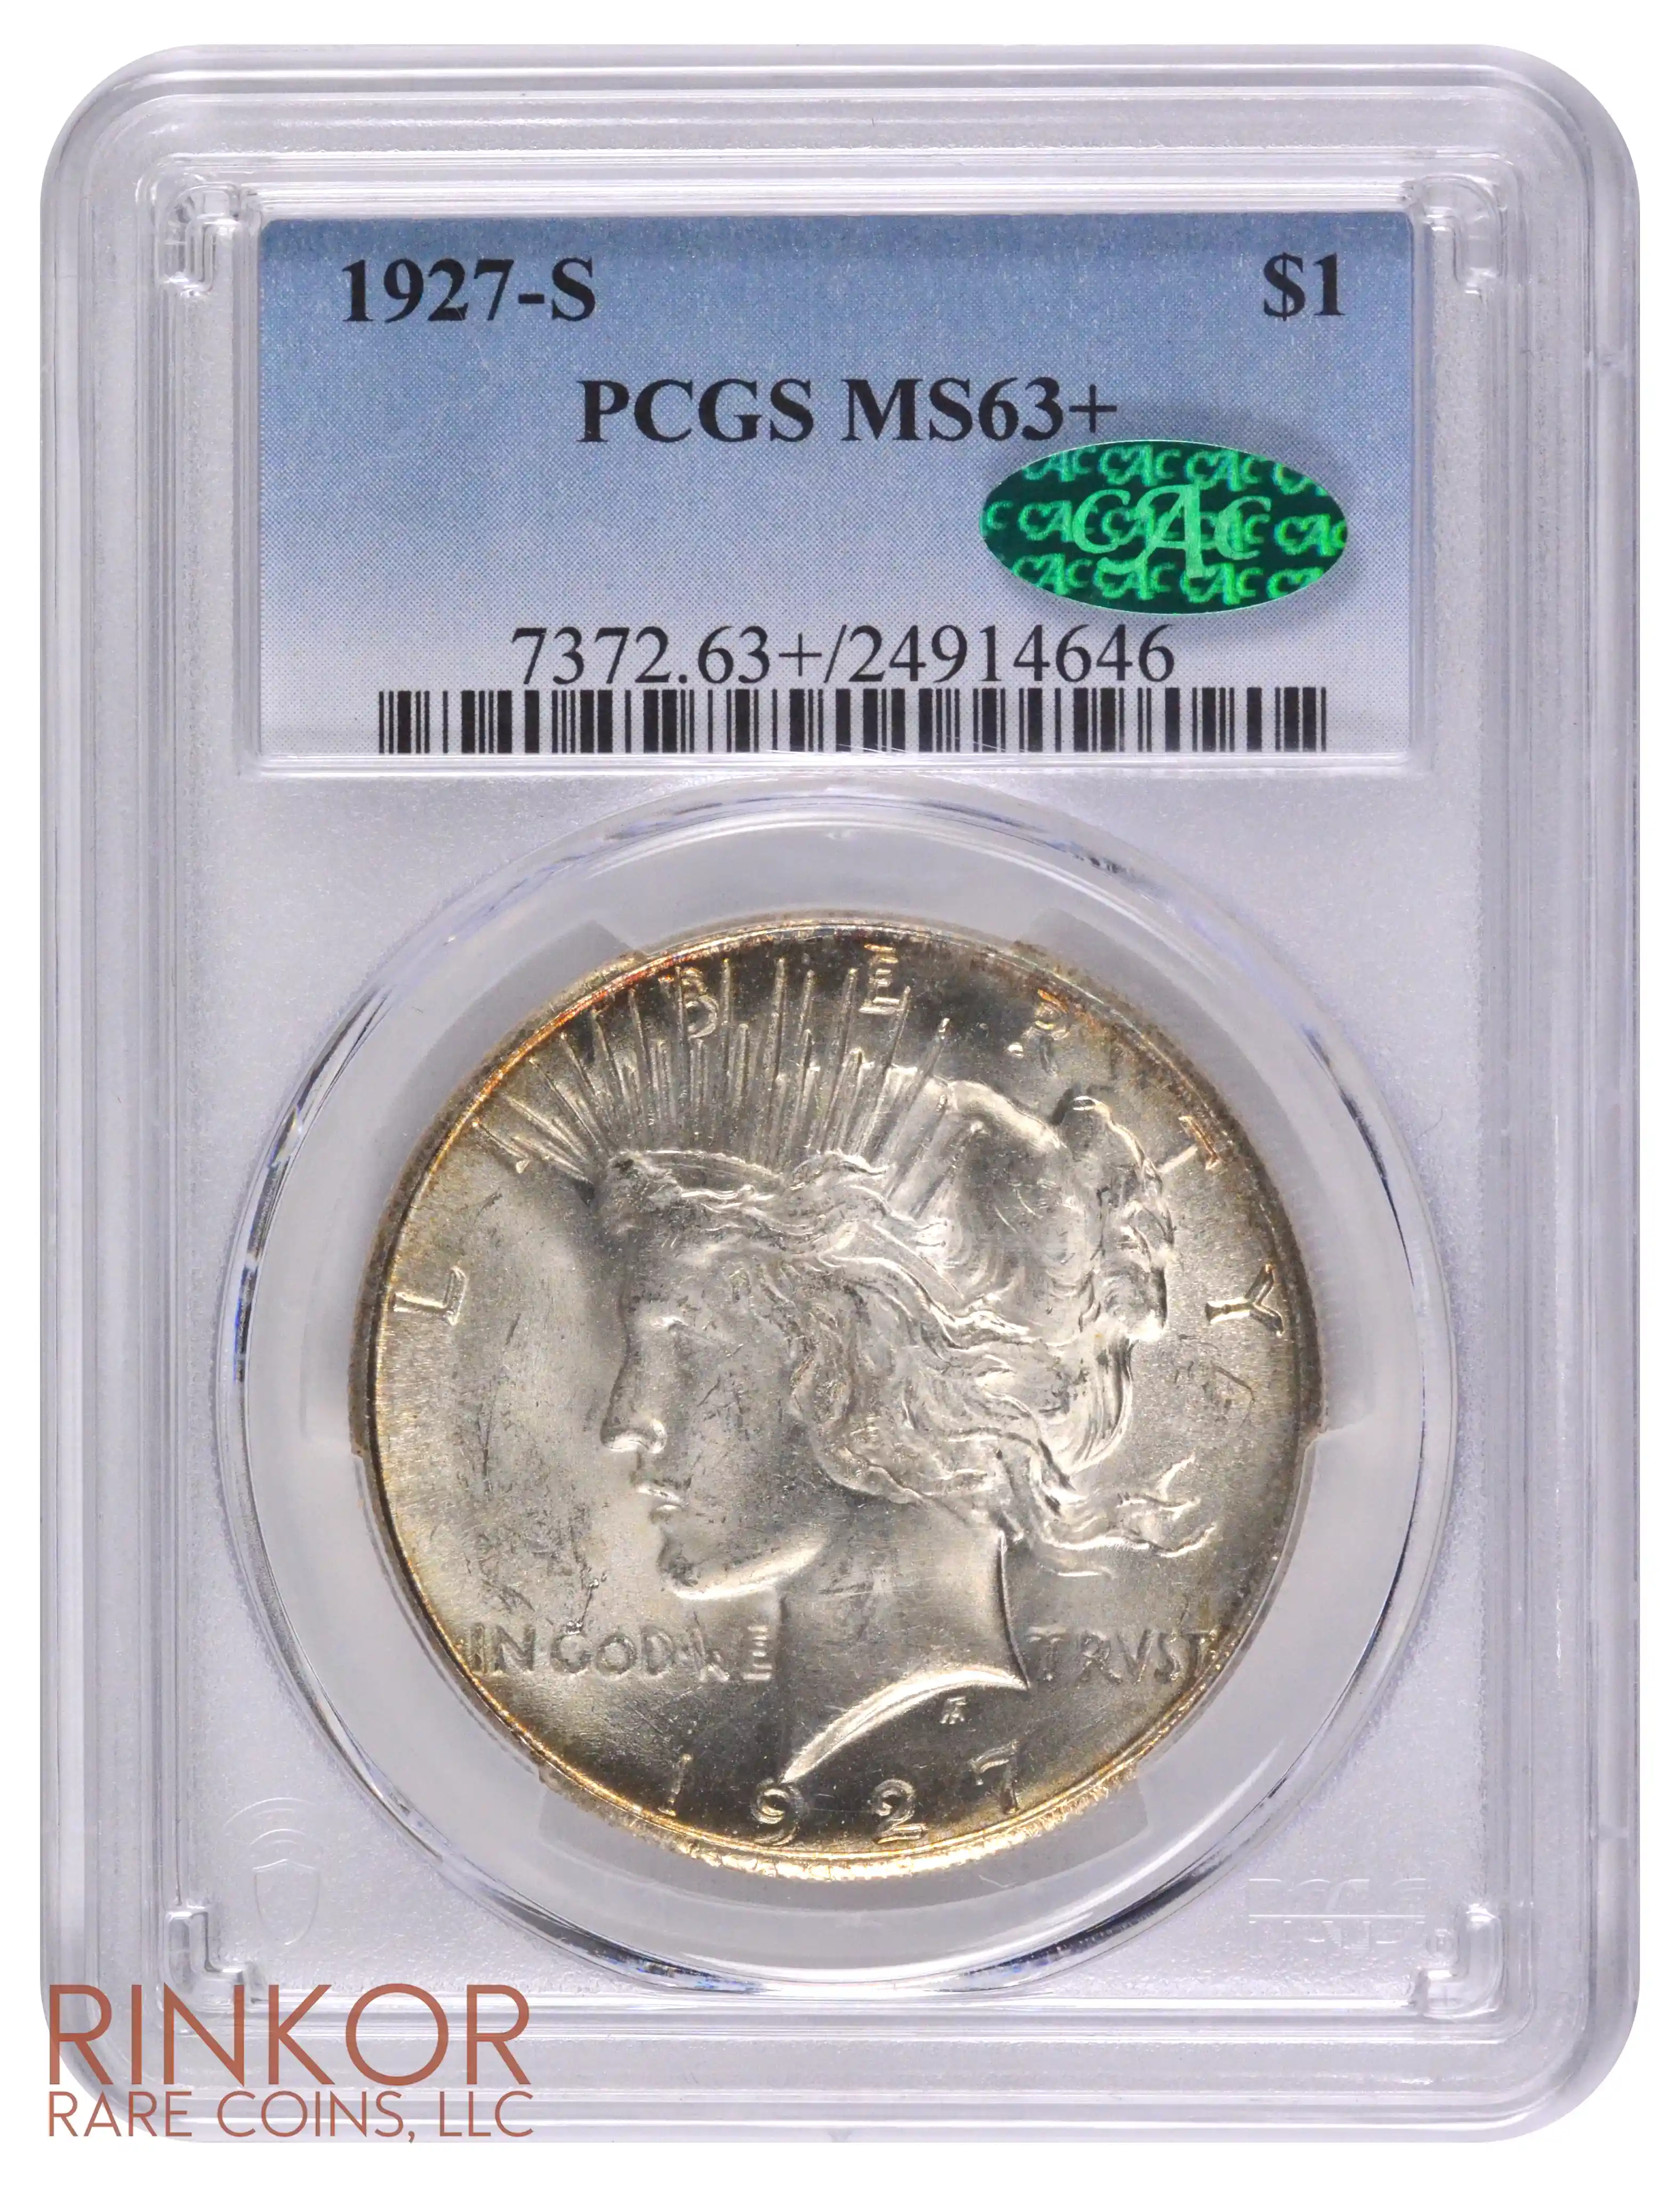 1927-S $1 PCGS MS 63+ CAC